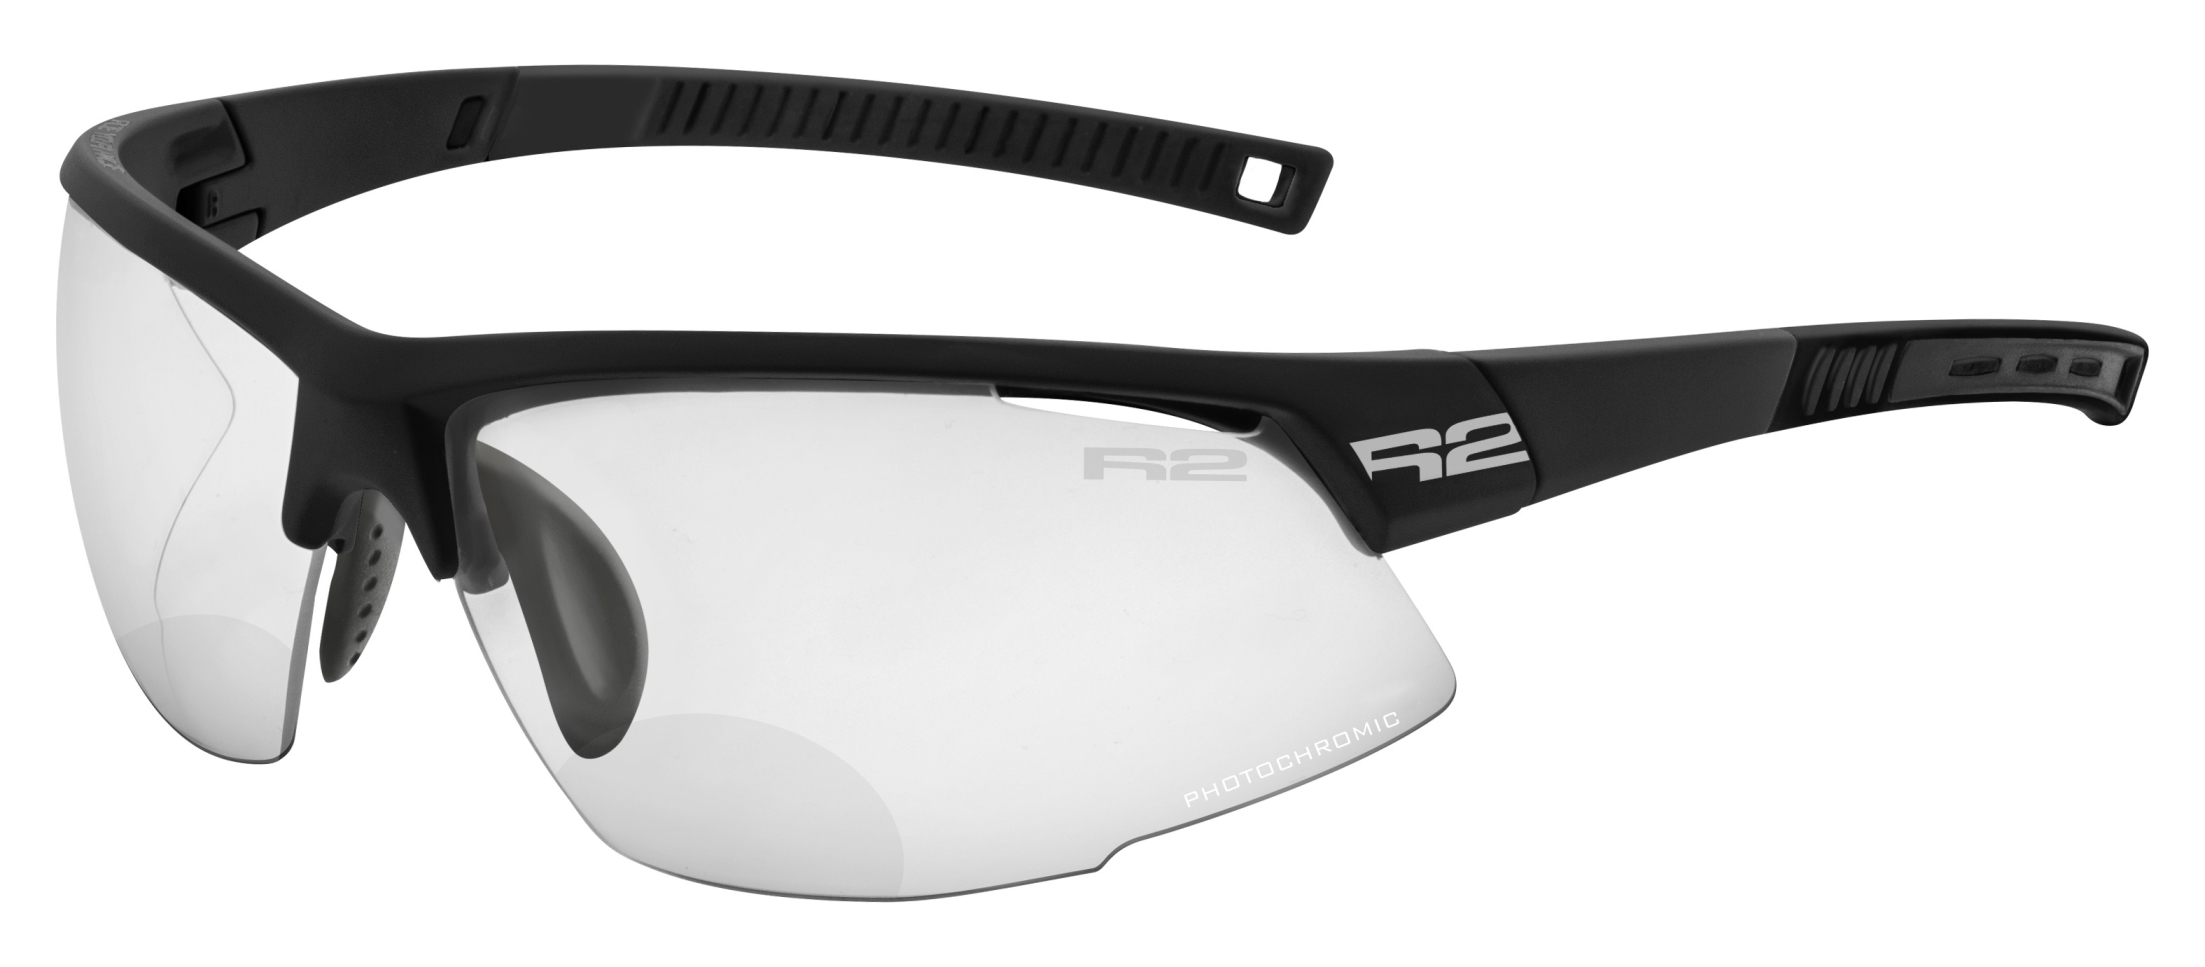 Photochromatic prescription sunglasses R2 RACER AT063A10/1,5